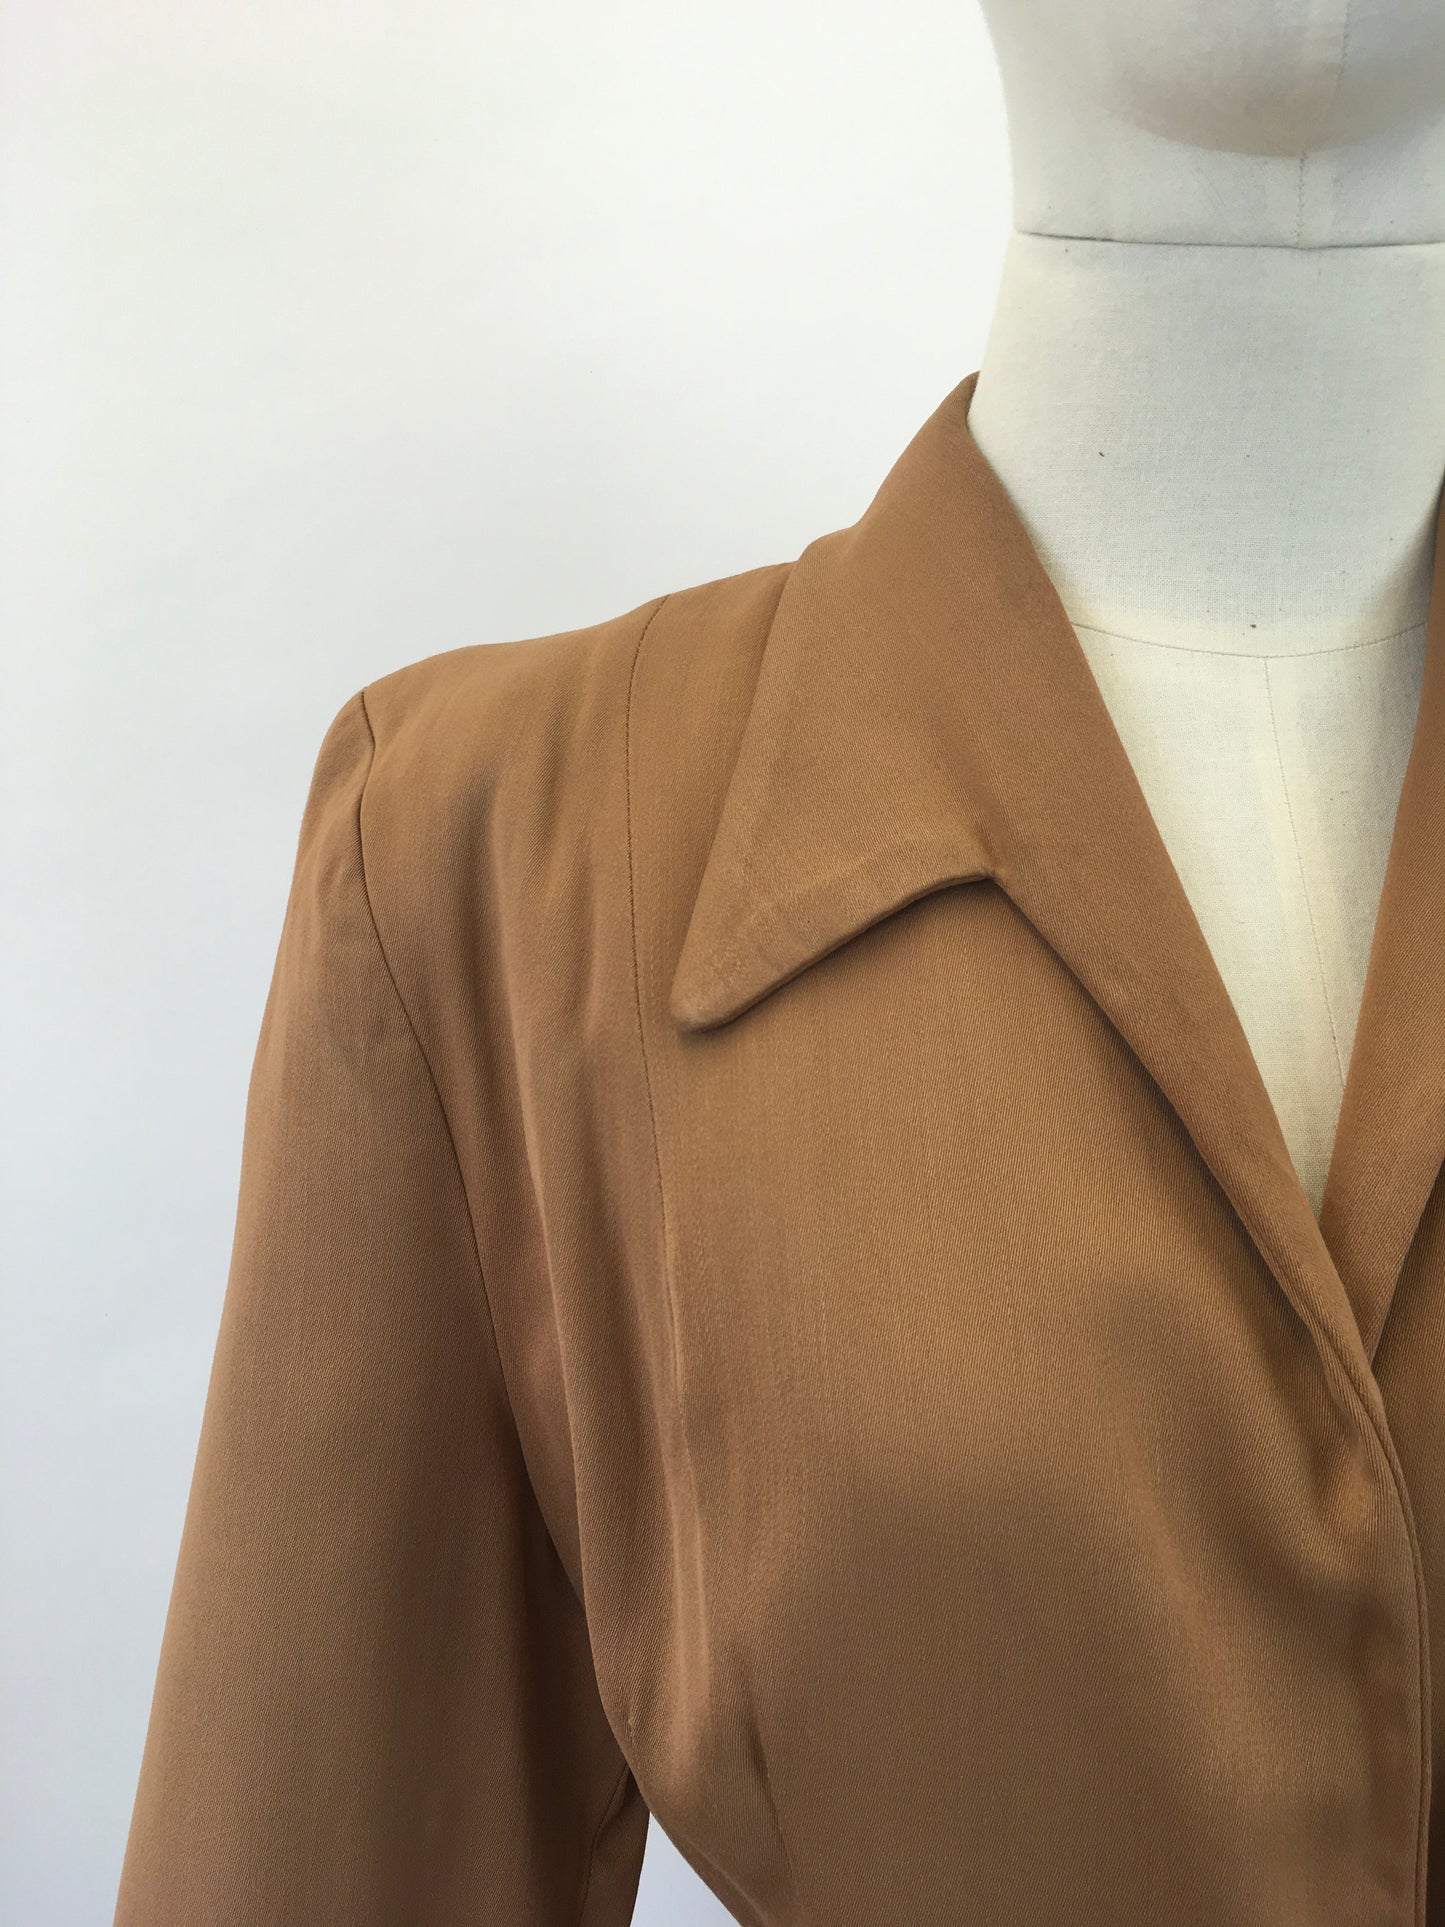 Original 1940's Stunning Gaberdine Fitted Jacket - In A Rich Caramel Brown